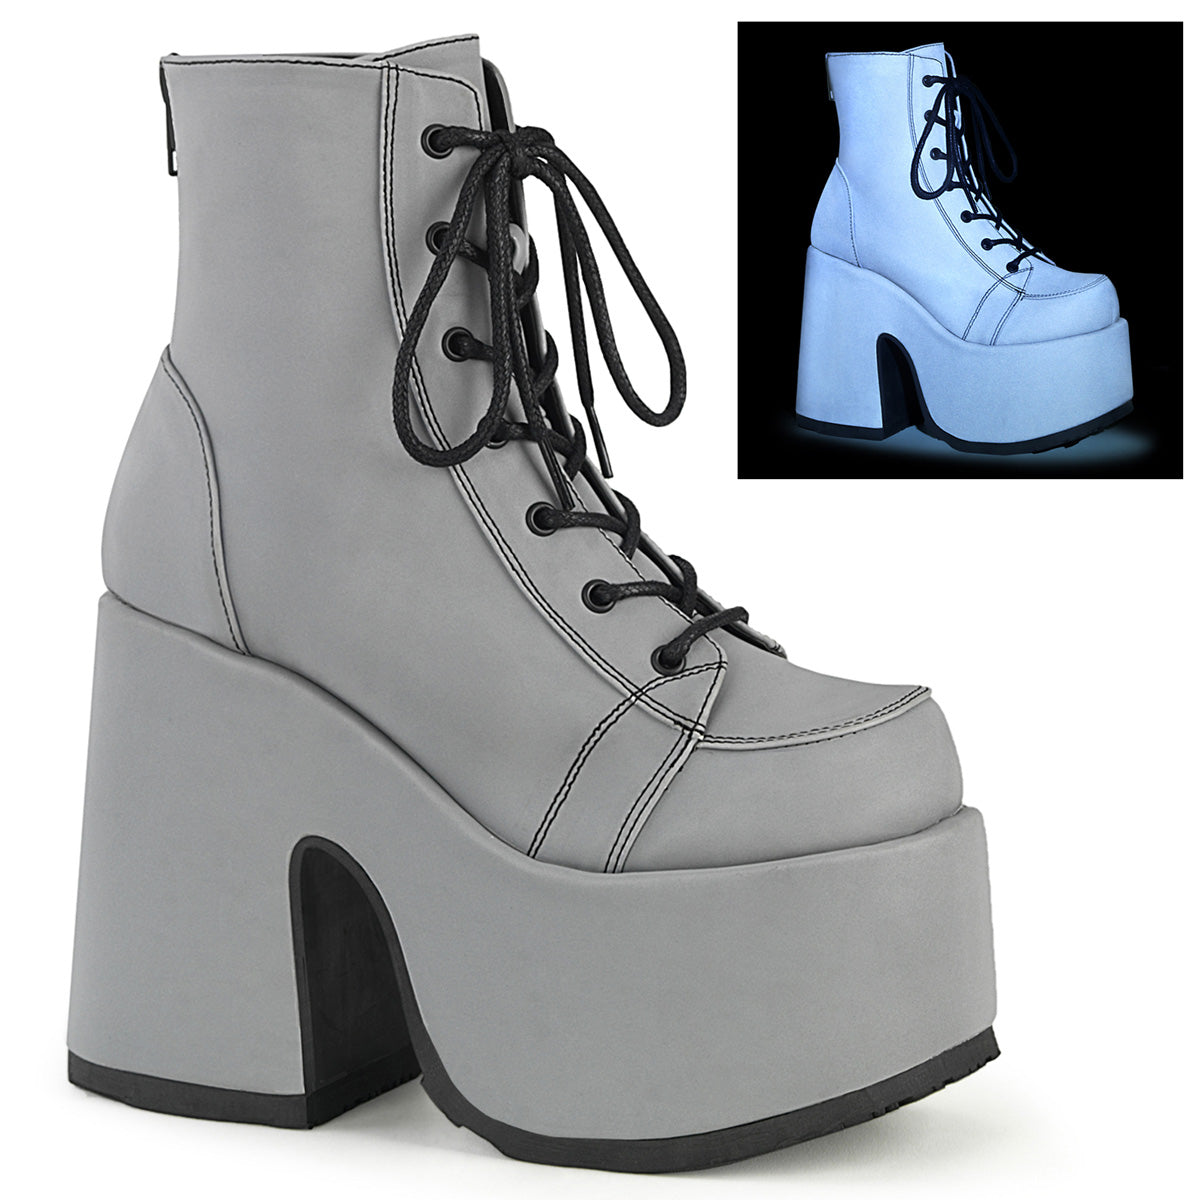 CAMEL-203 Alternative Footwear Demonia Women's Ankle Boots Grey Reflective Vegan Leather